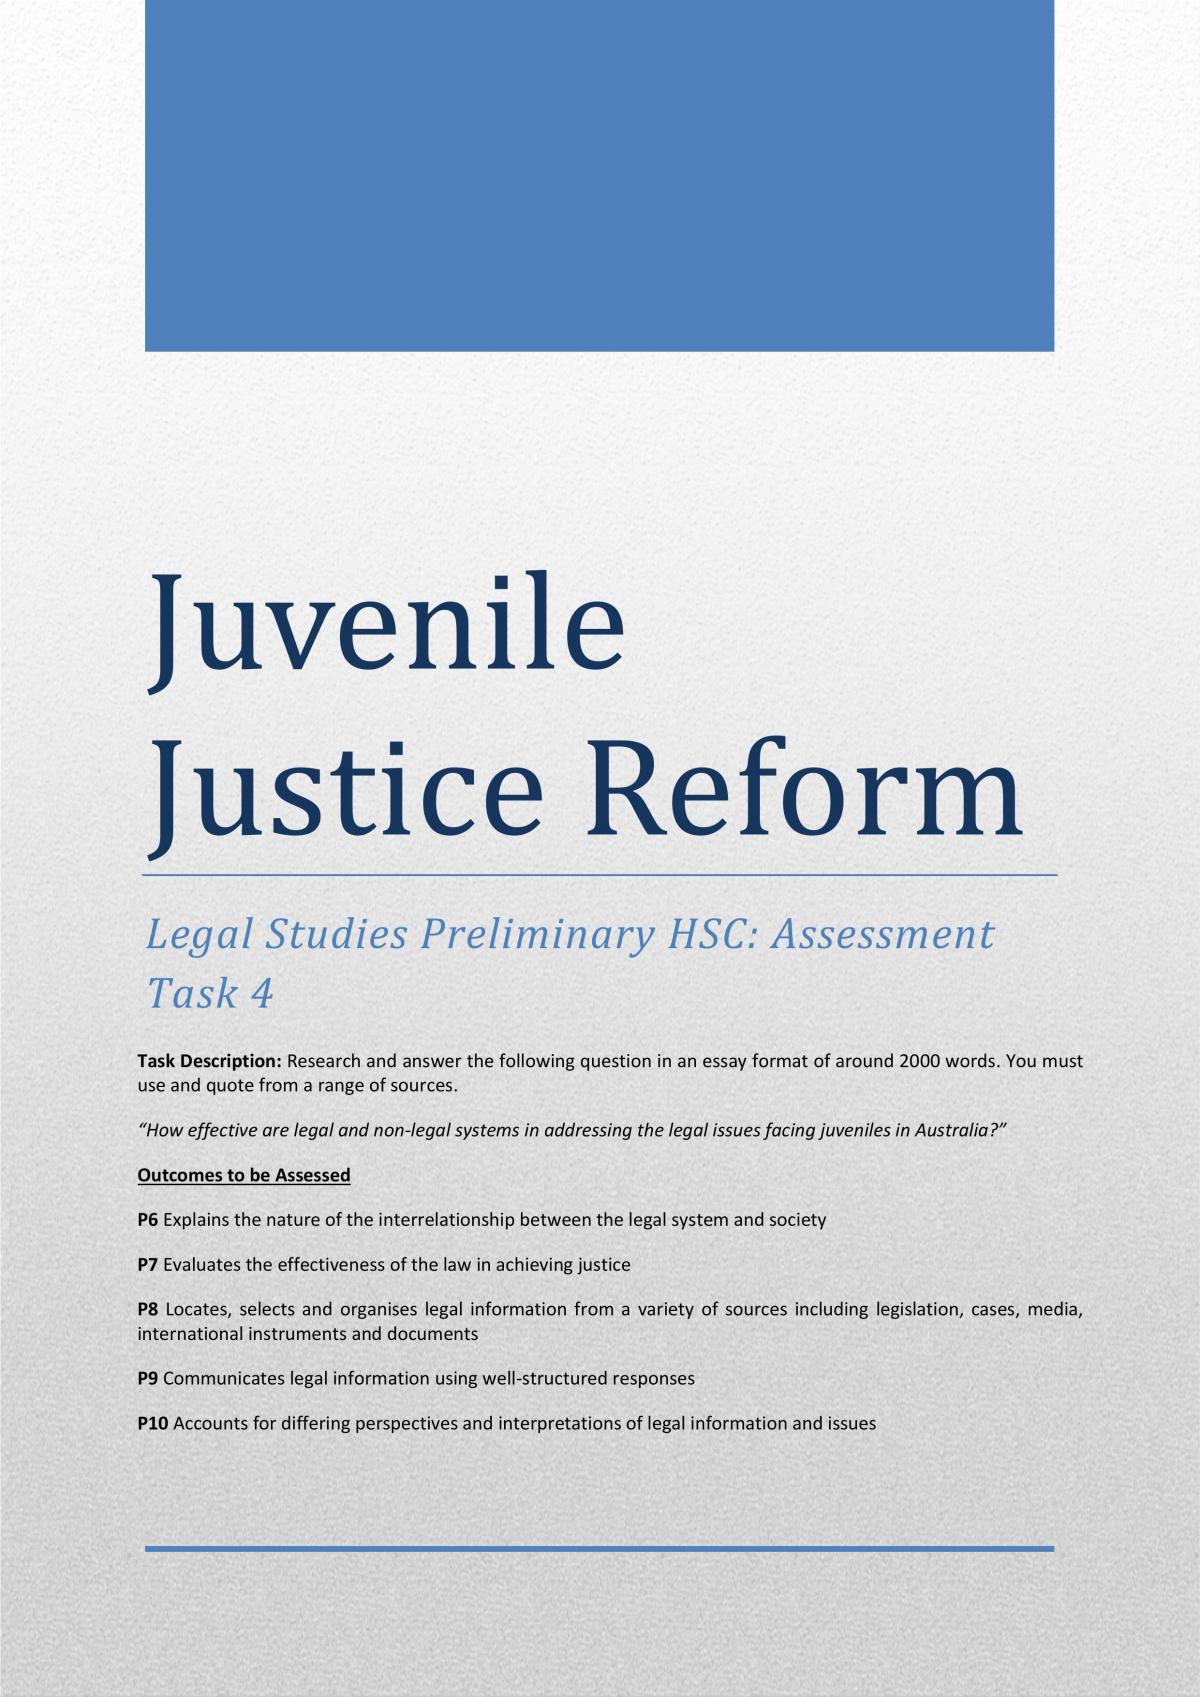 juvenile justice essay thesis